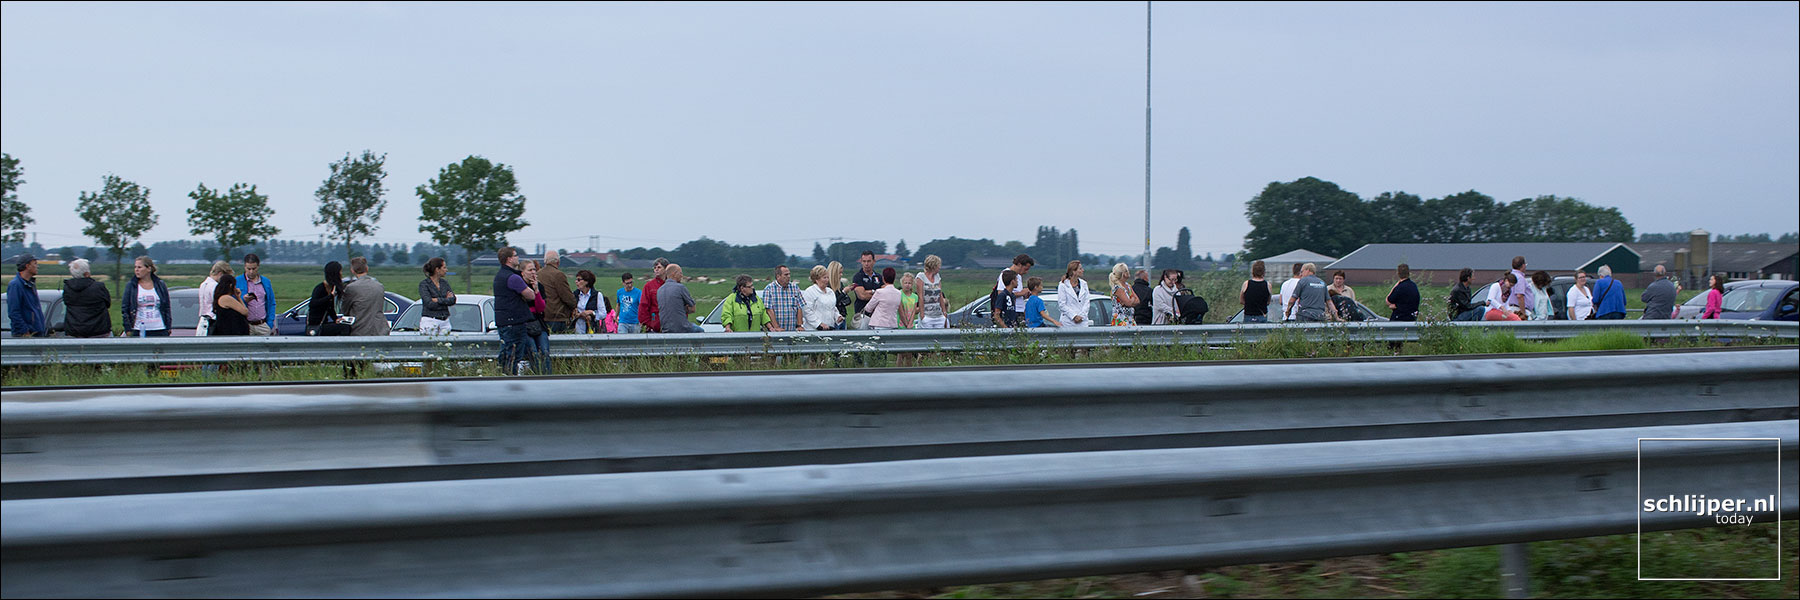 Nederland, Bruchem, 25 juli 2014